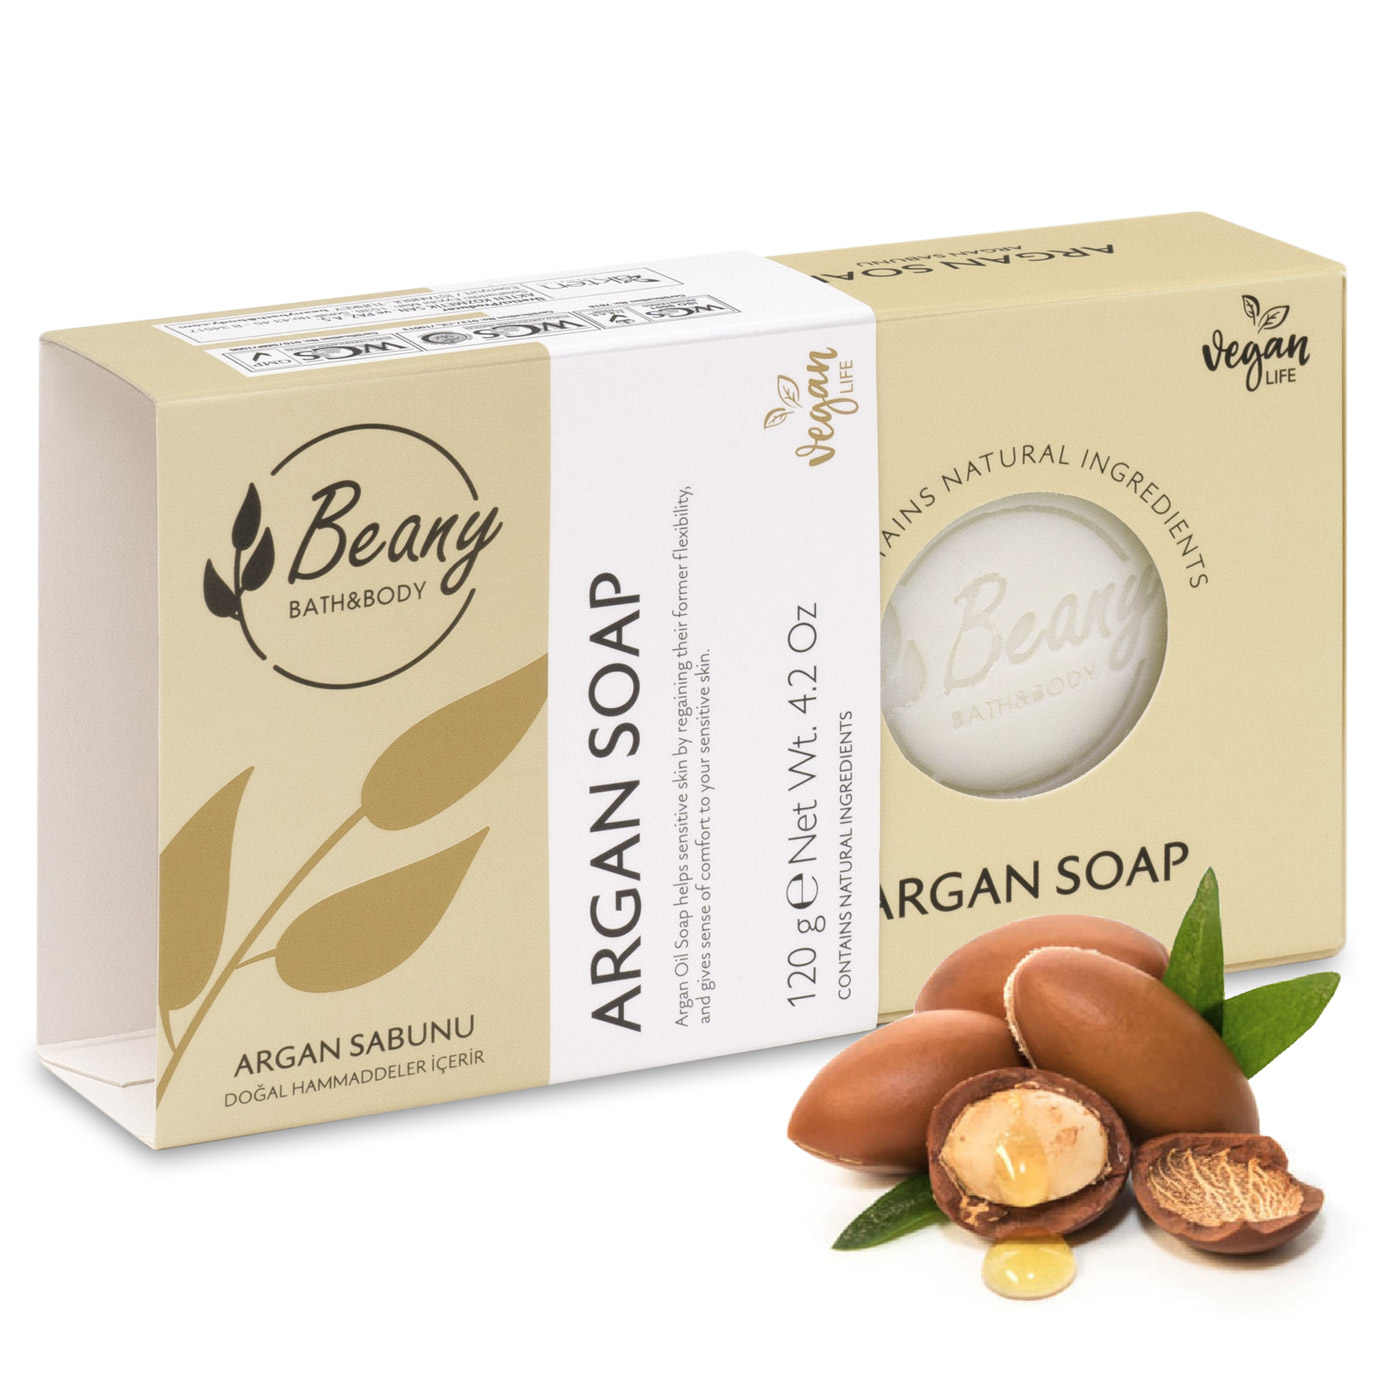 Мыло Beany твердое натуральное турецкое Argan Oil Soap с аргановым маслом мыло beany твердое натуральное турецкое argan oil soap с аргановым маслом 3шт х 120г